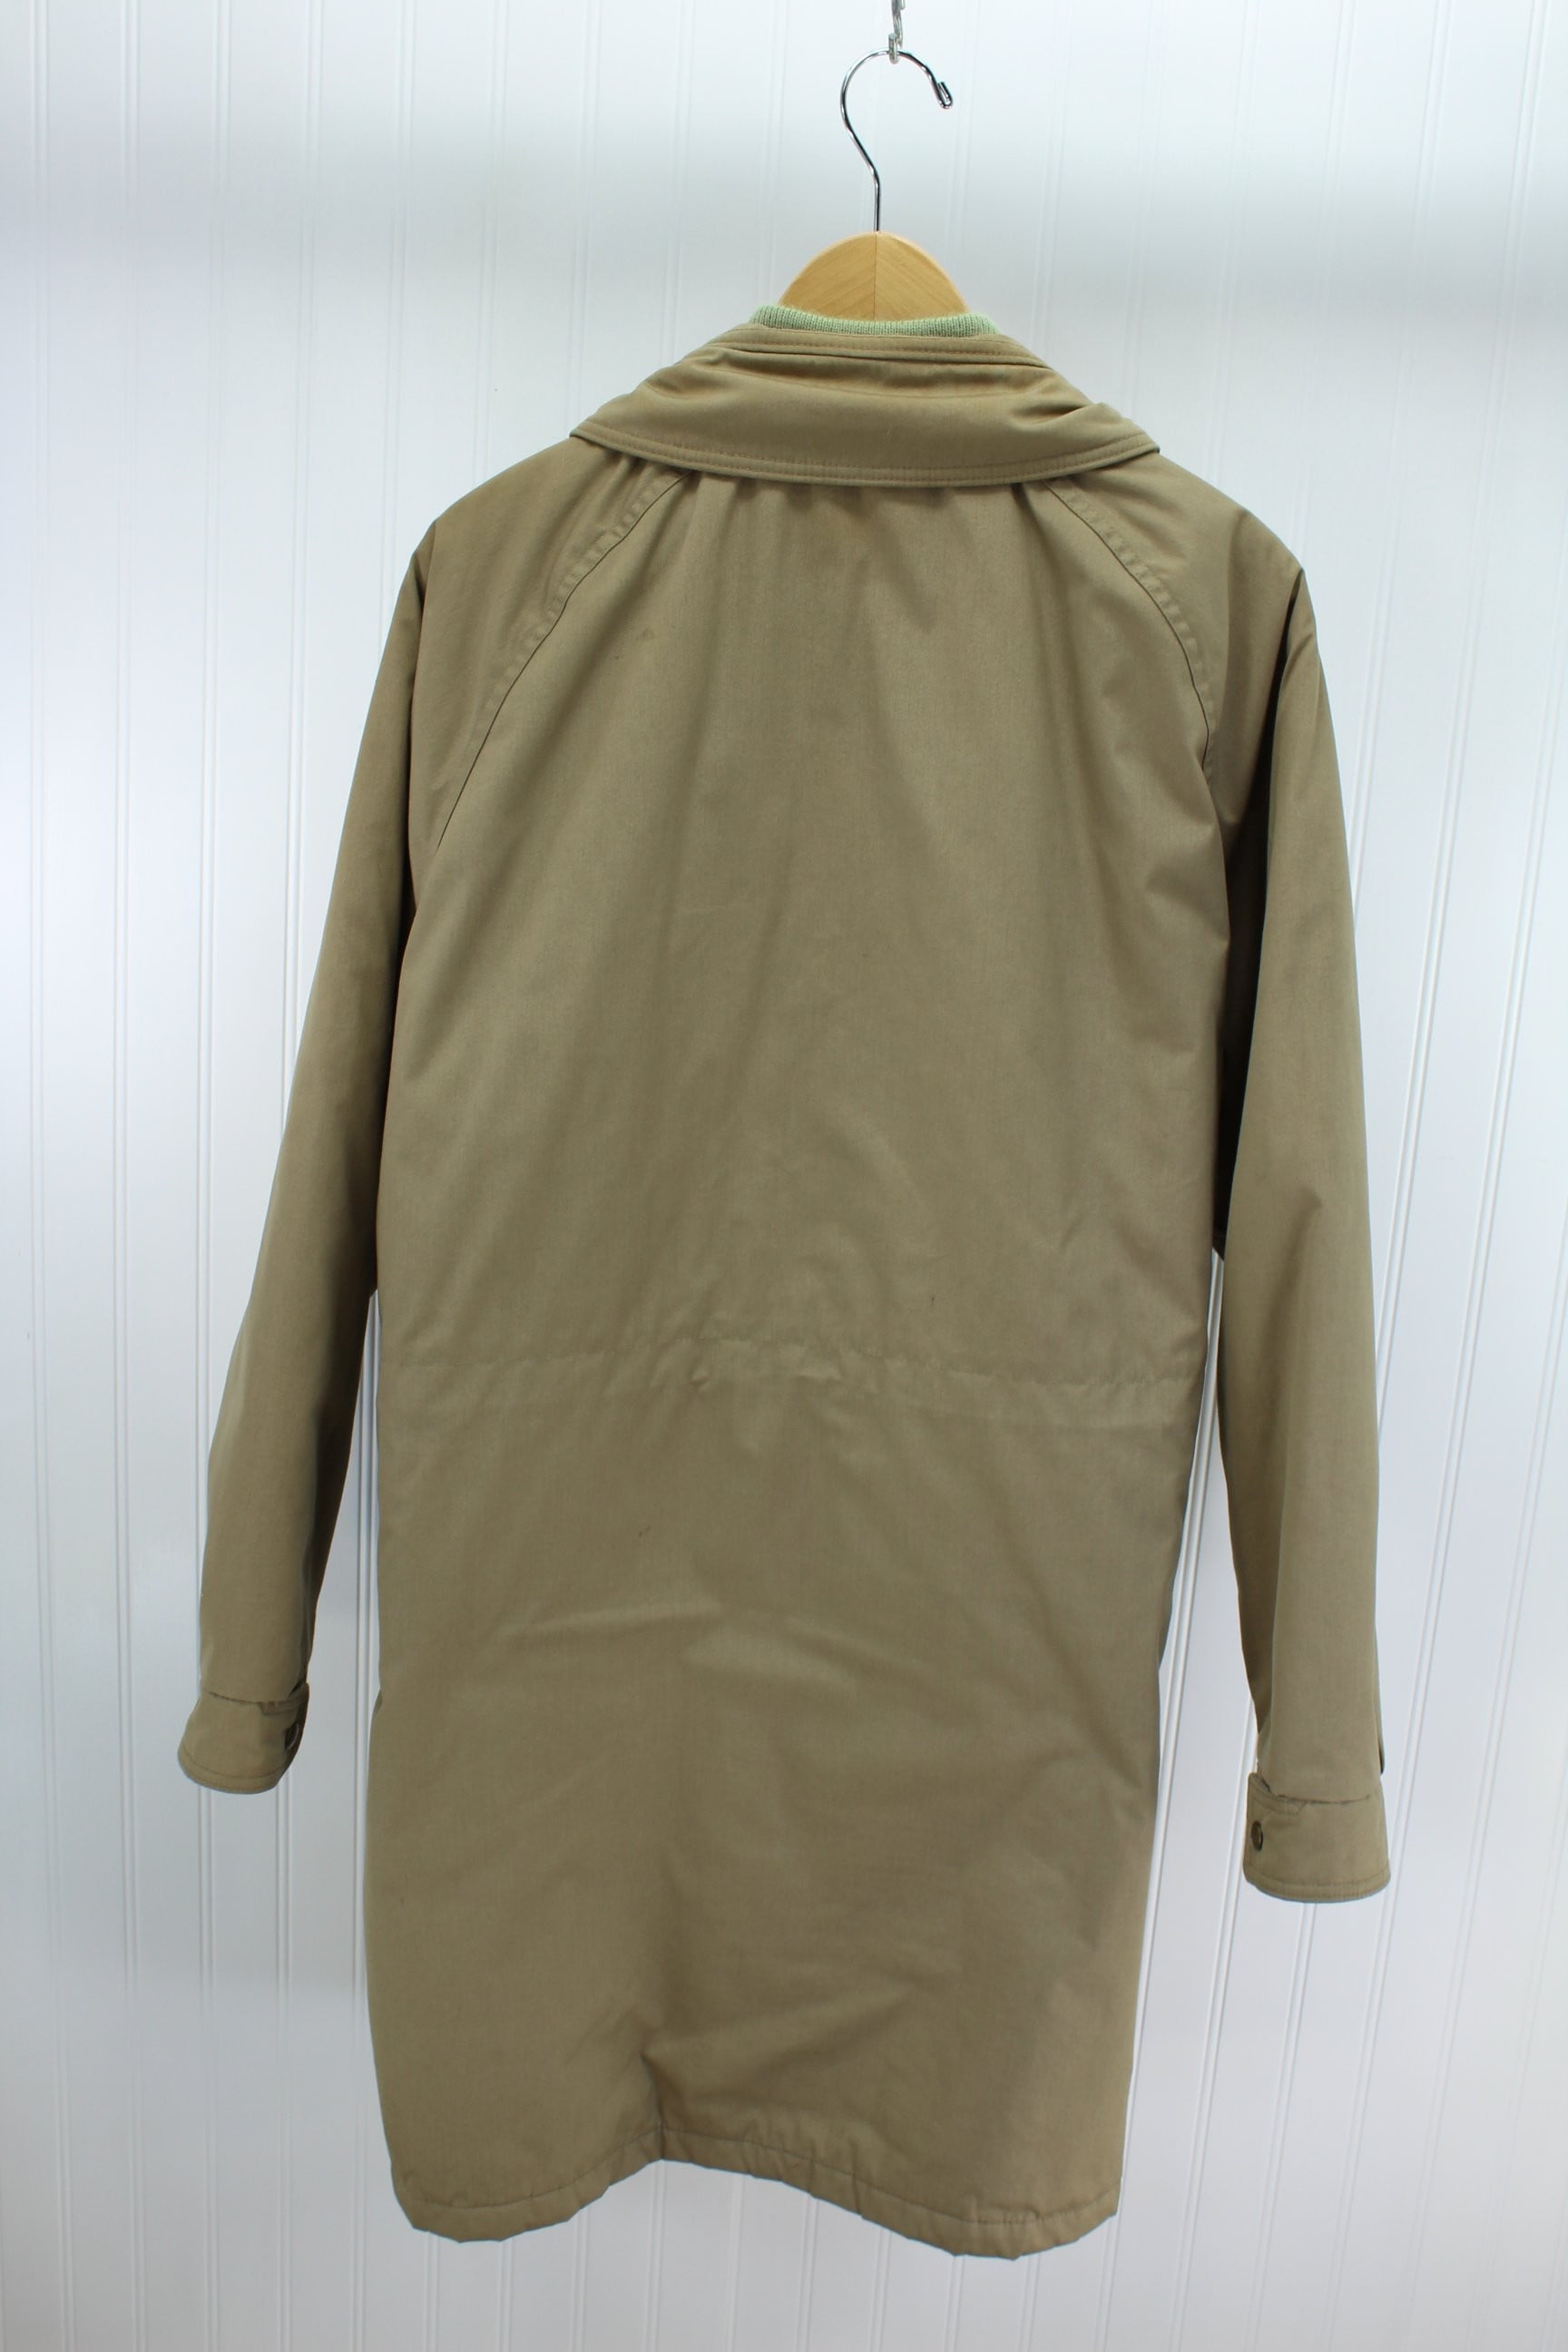 L L Bean Khaki Coat Vintage Mens Wool Plaid Lining Polyester Insulation tan